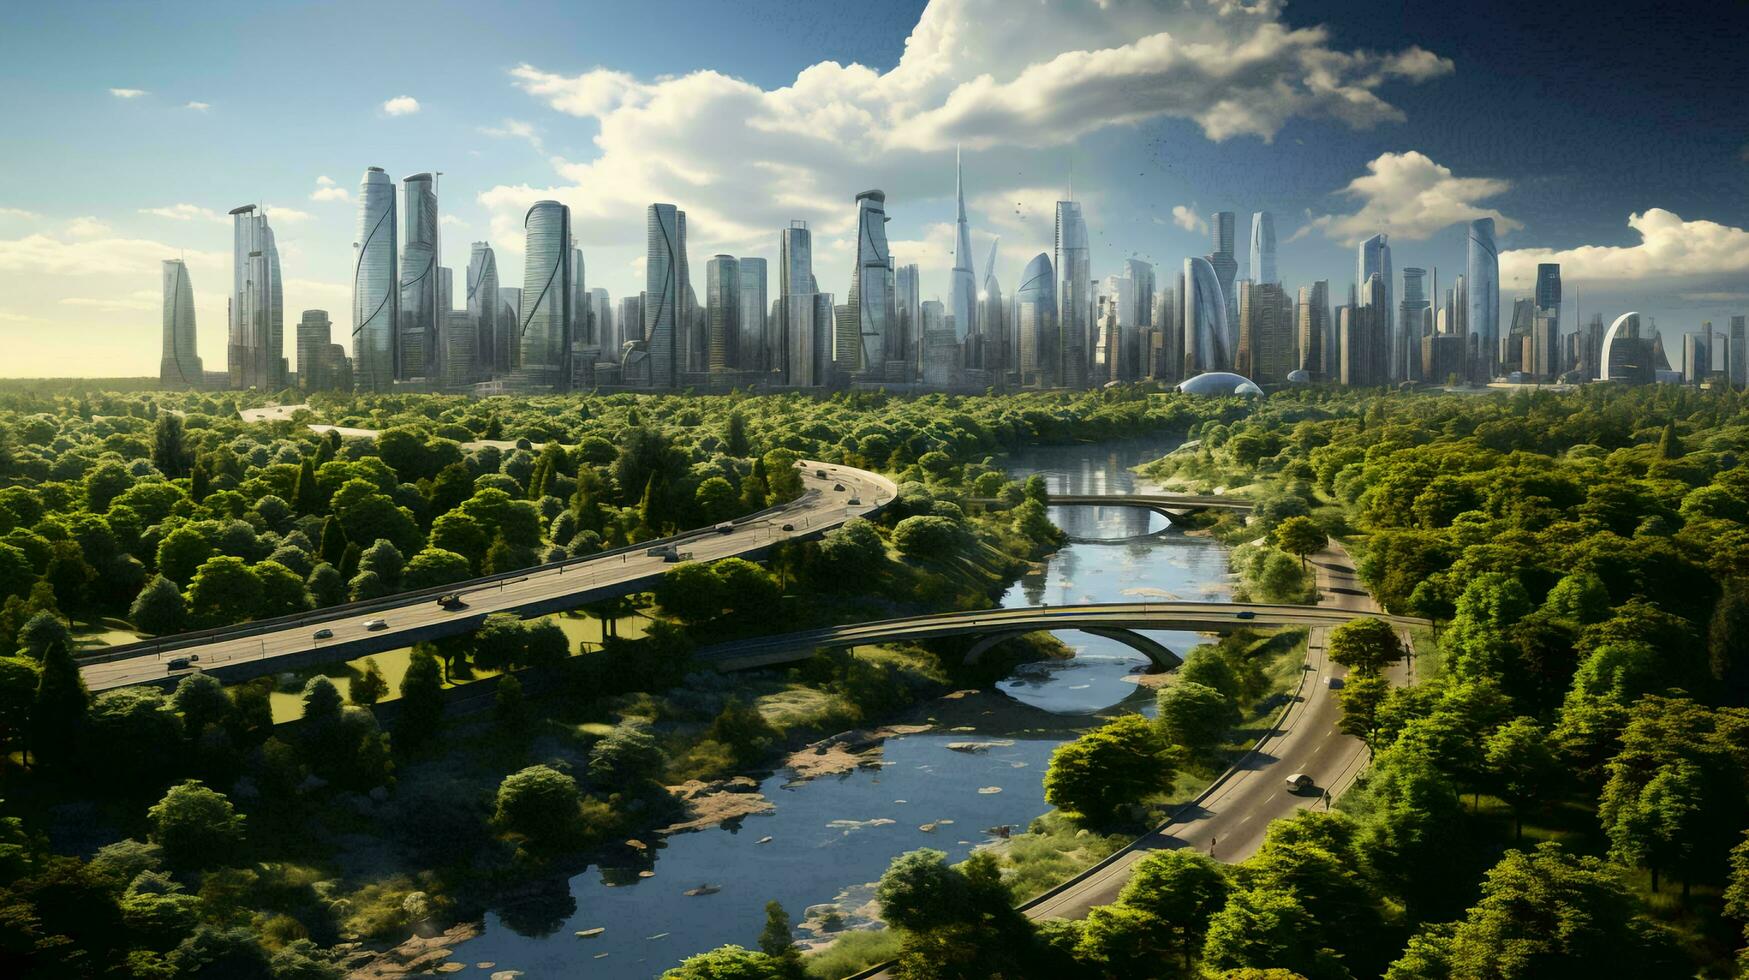 Green environmentally friendly city of the future with many green plants and alternative energy photo